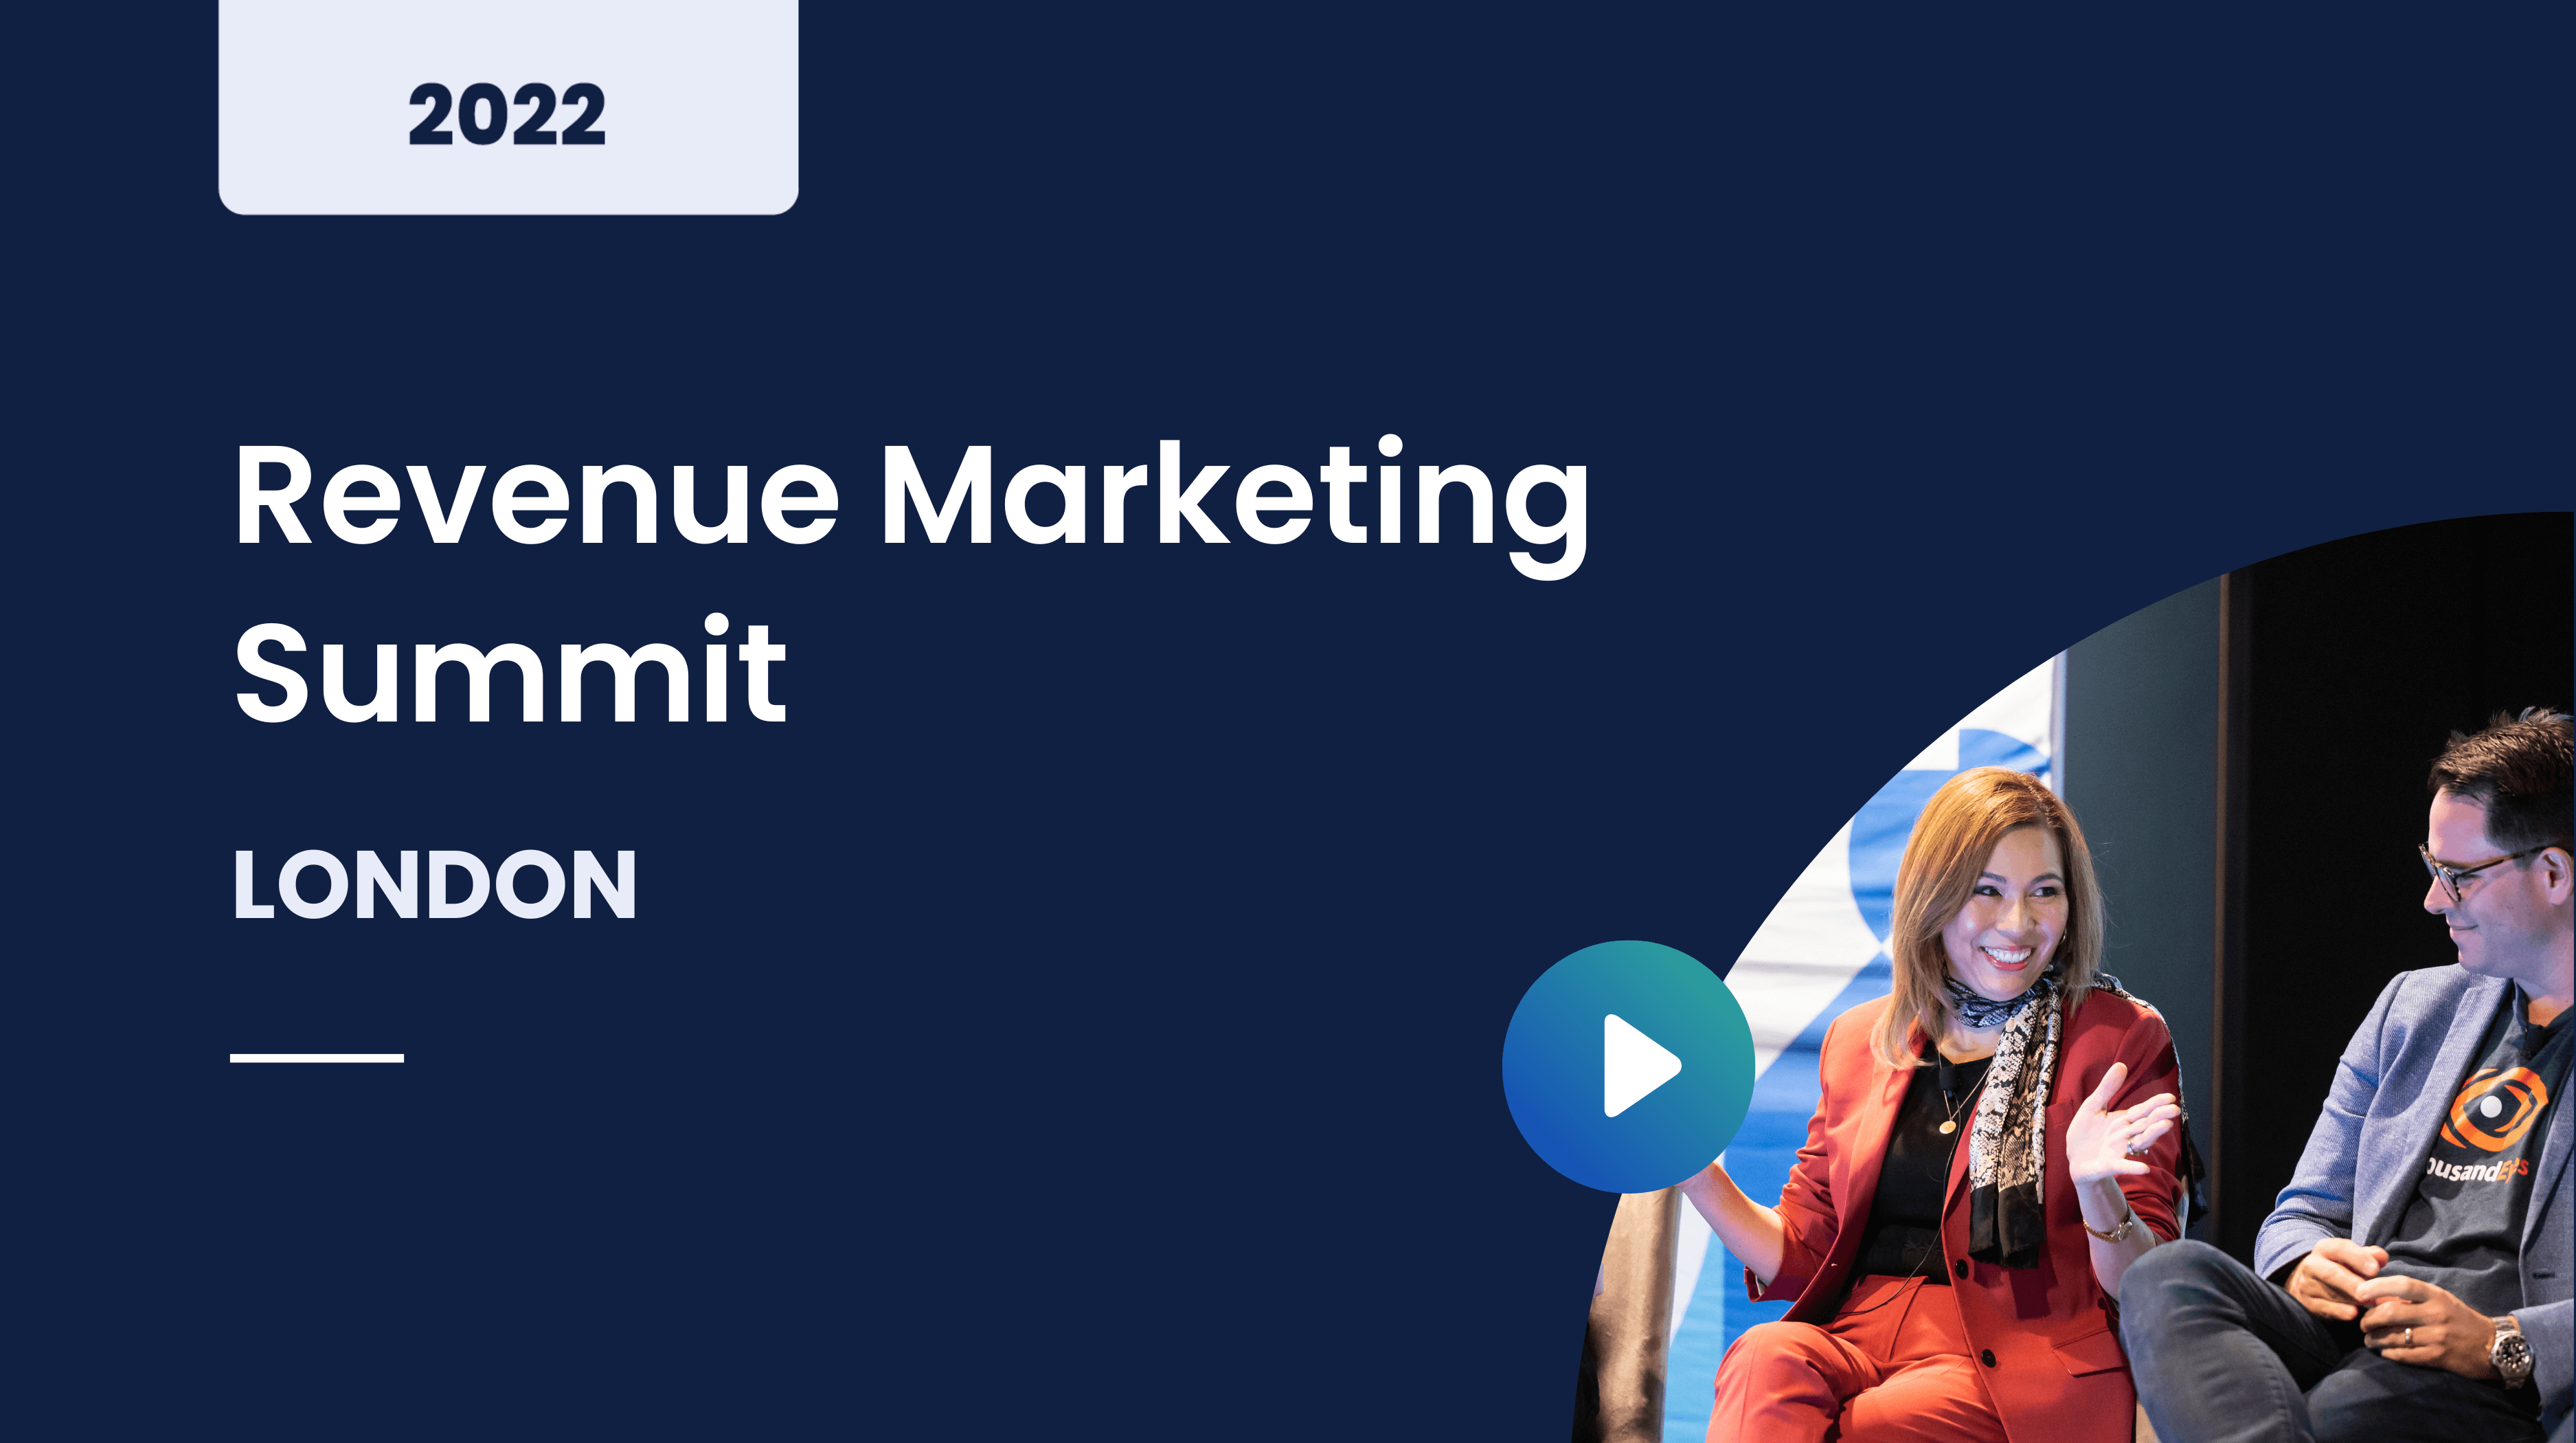 Revenue Marketing Summit London December 2022